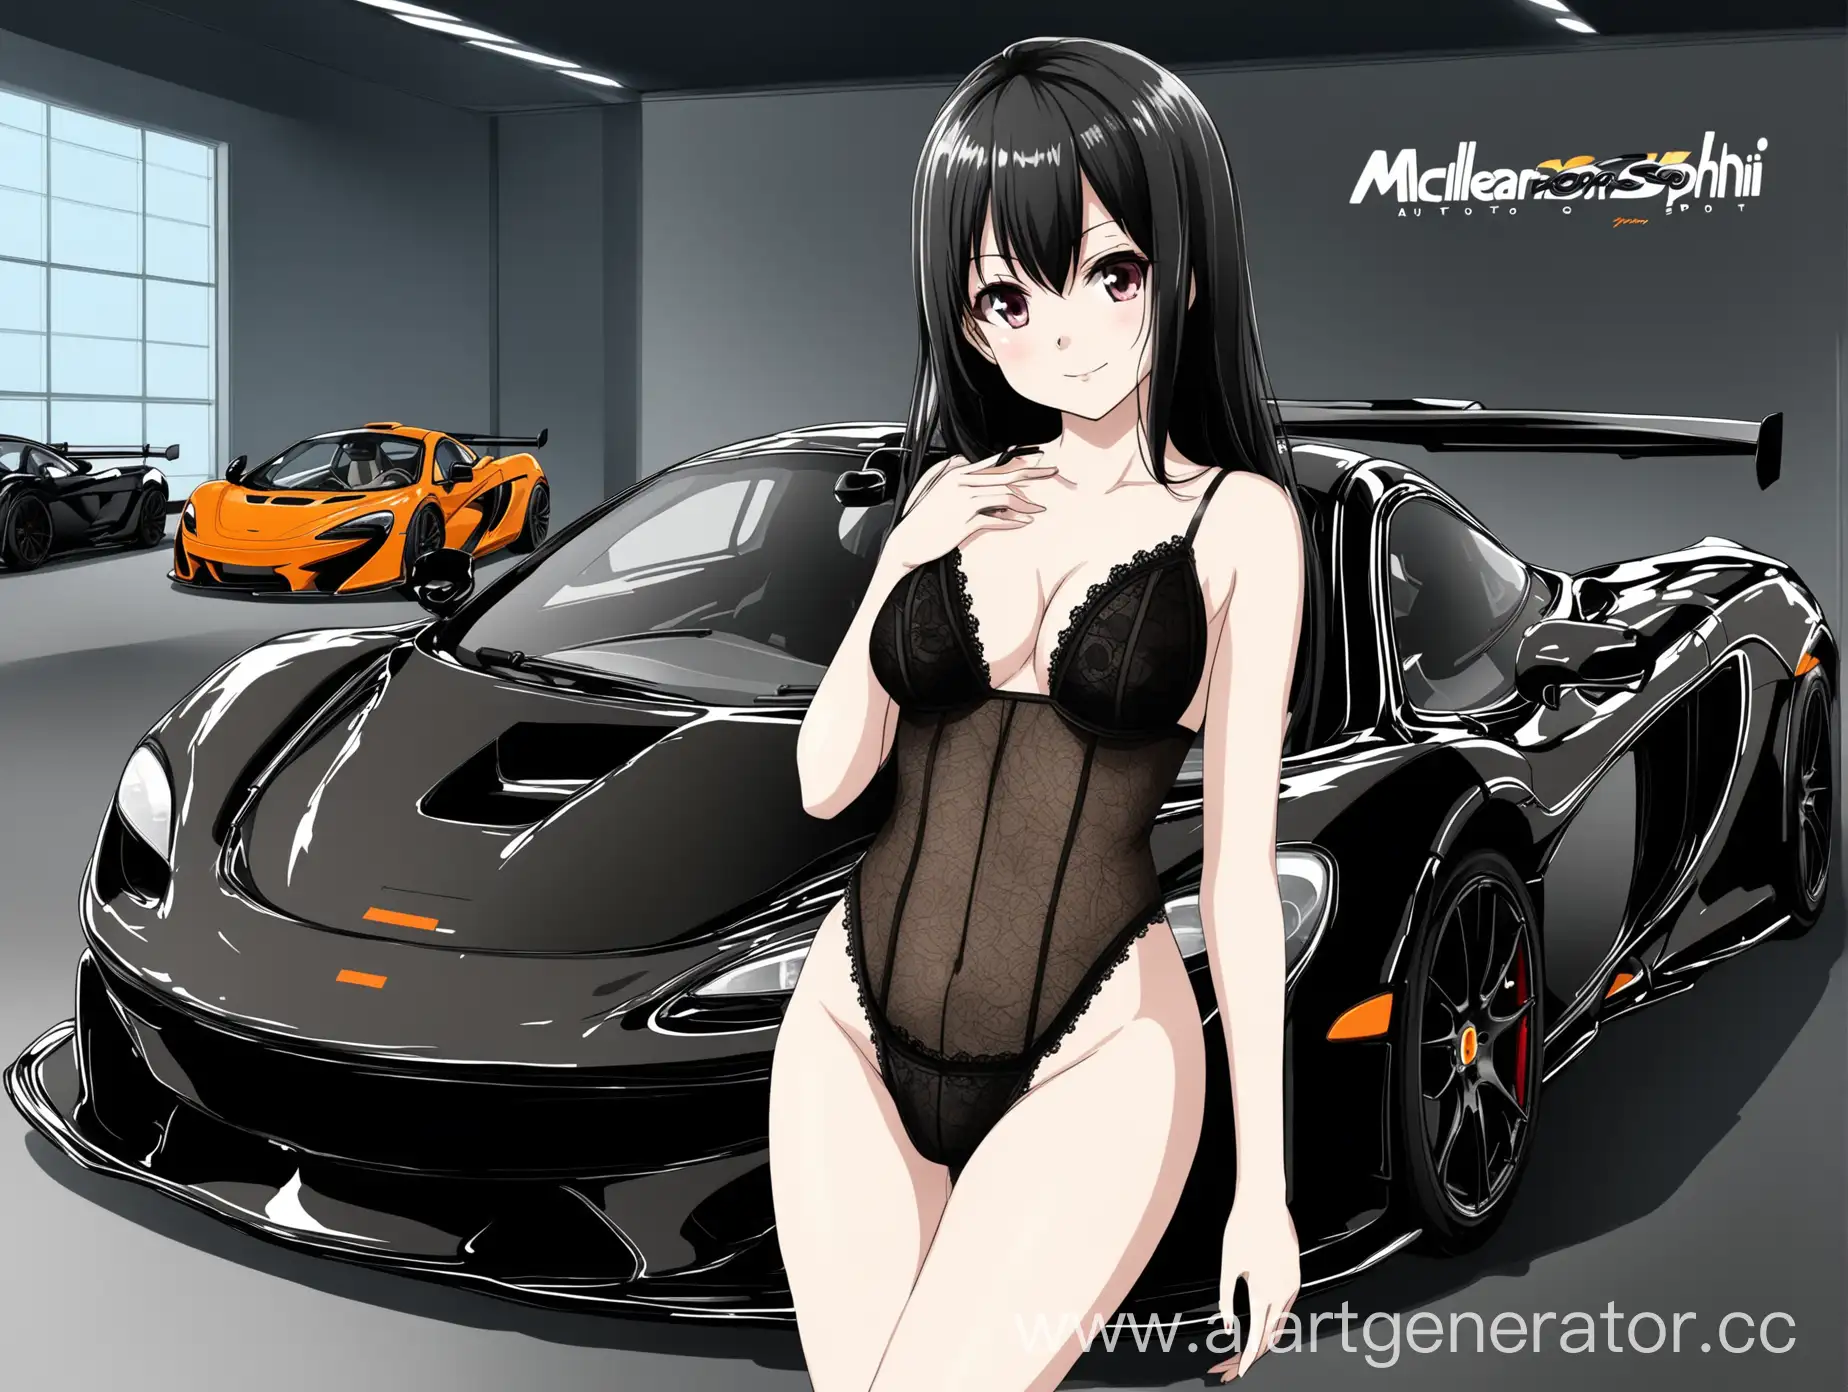 Anime-Girl-in-Black-Lingerie-with-McLaren-Sports-Car-in-Yokomoshi-Black-Livery